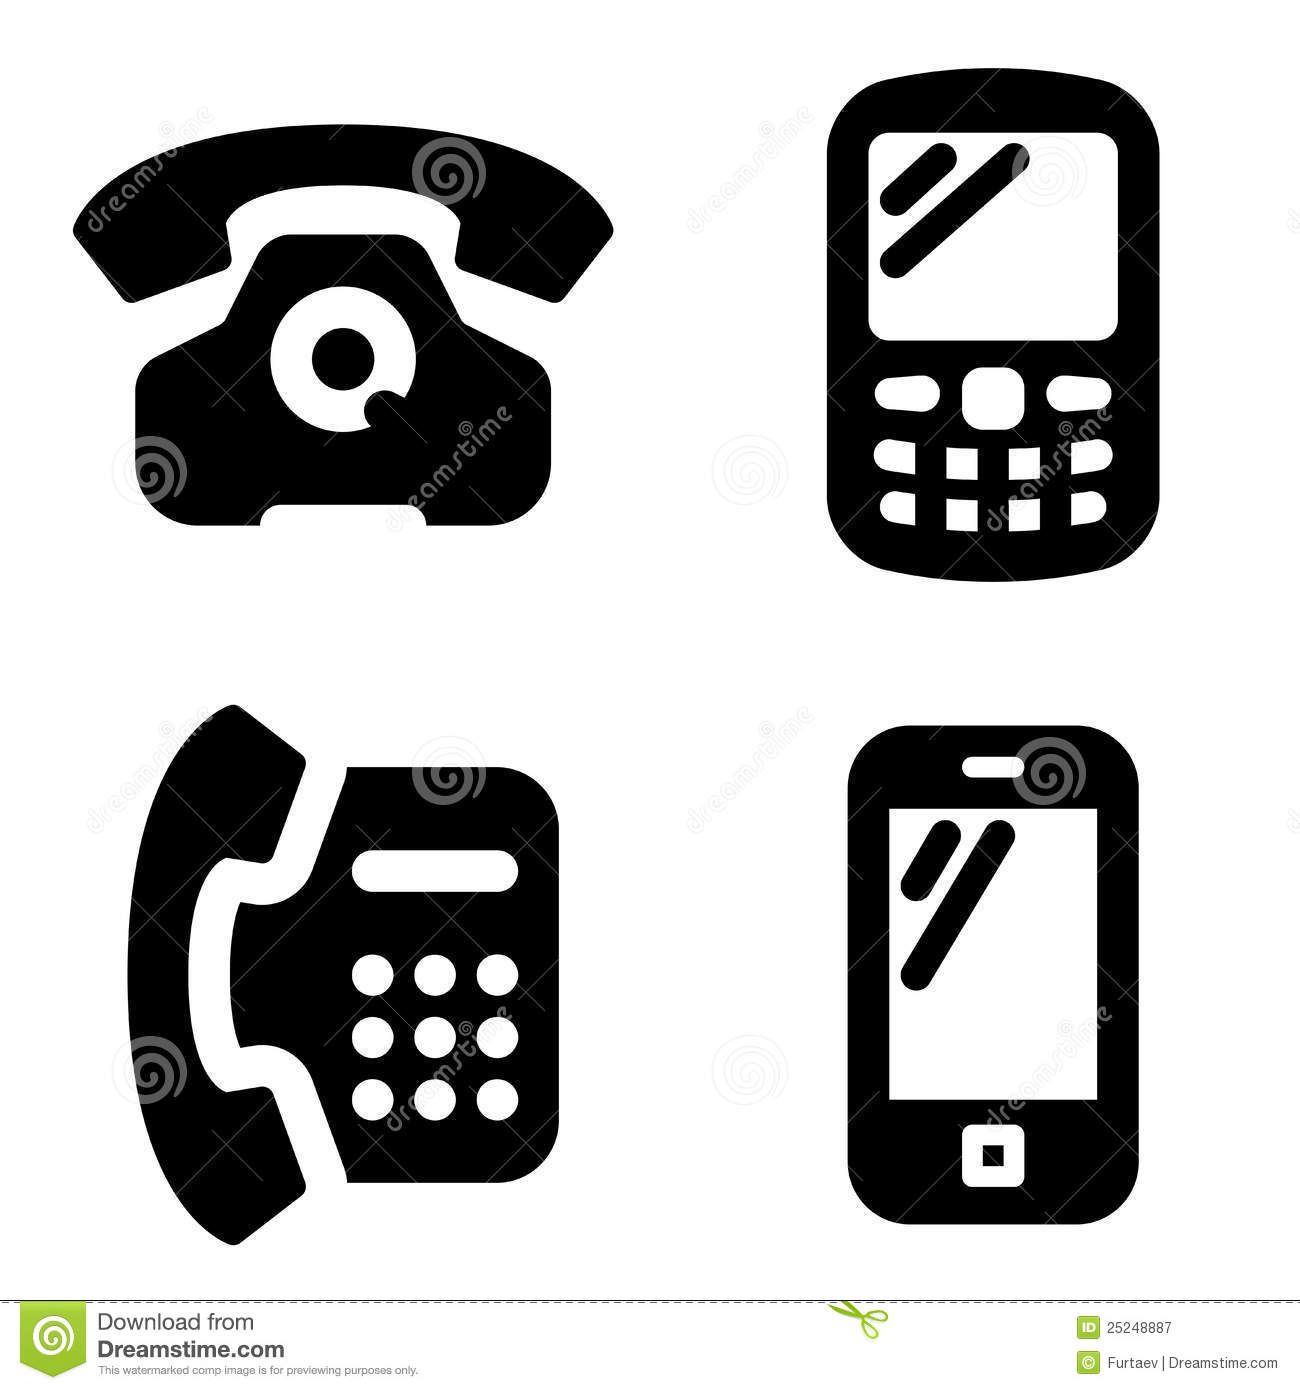 Jaki telefon do ciebie pasuje ?